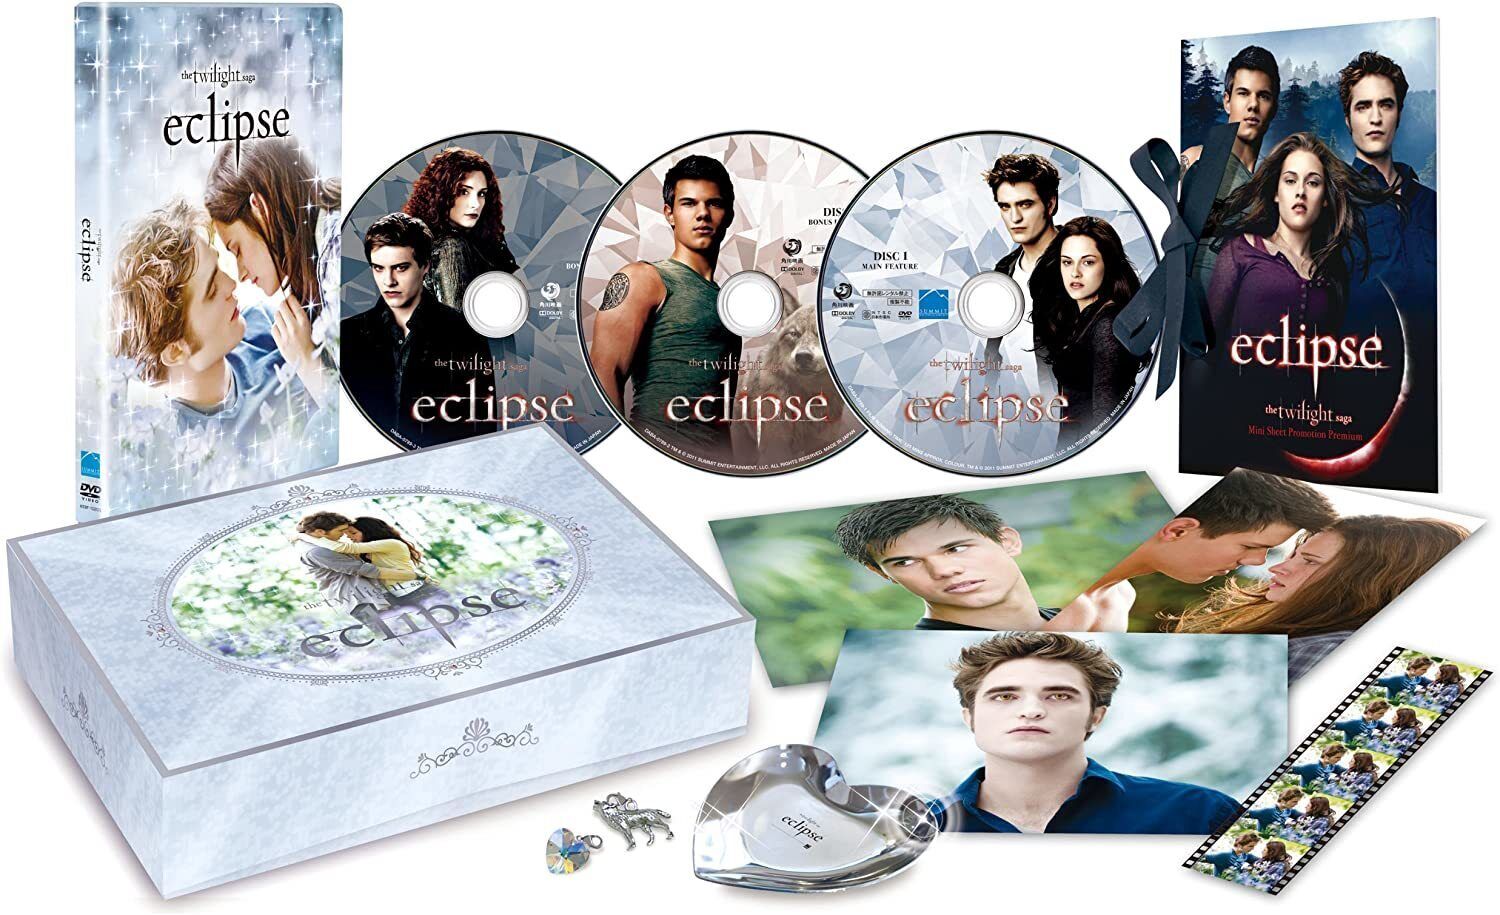 Eclipse / The Twilight Saga Premium Box Limited to 10000 Sets DVD